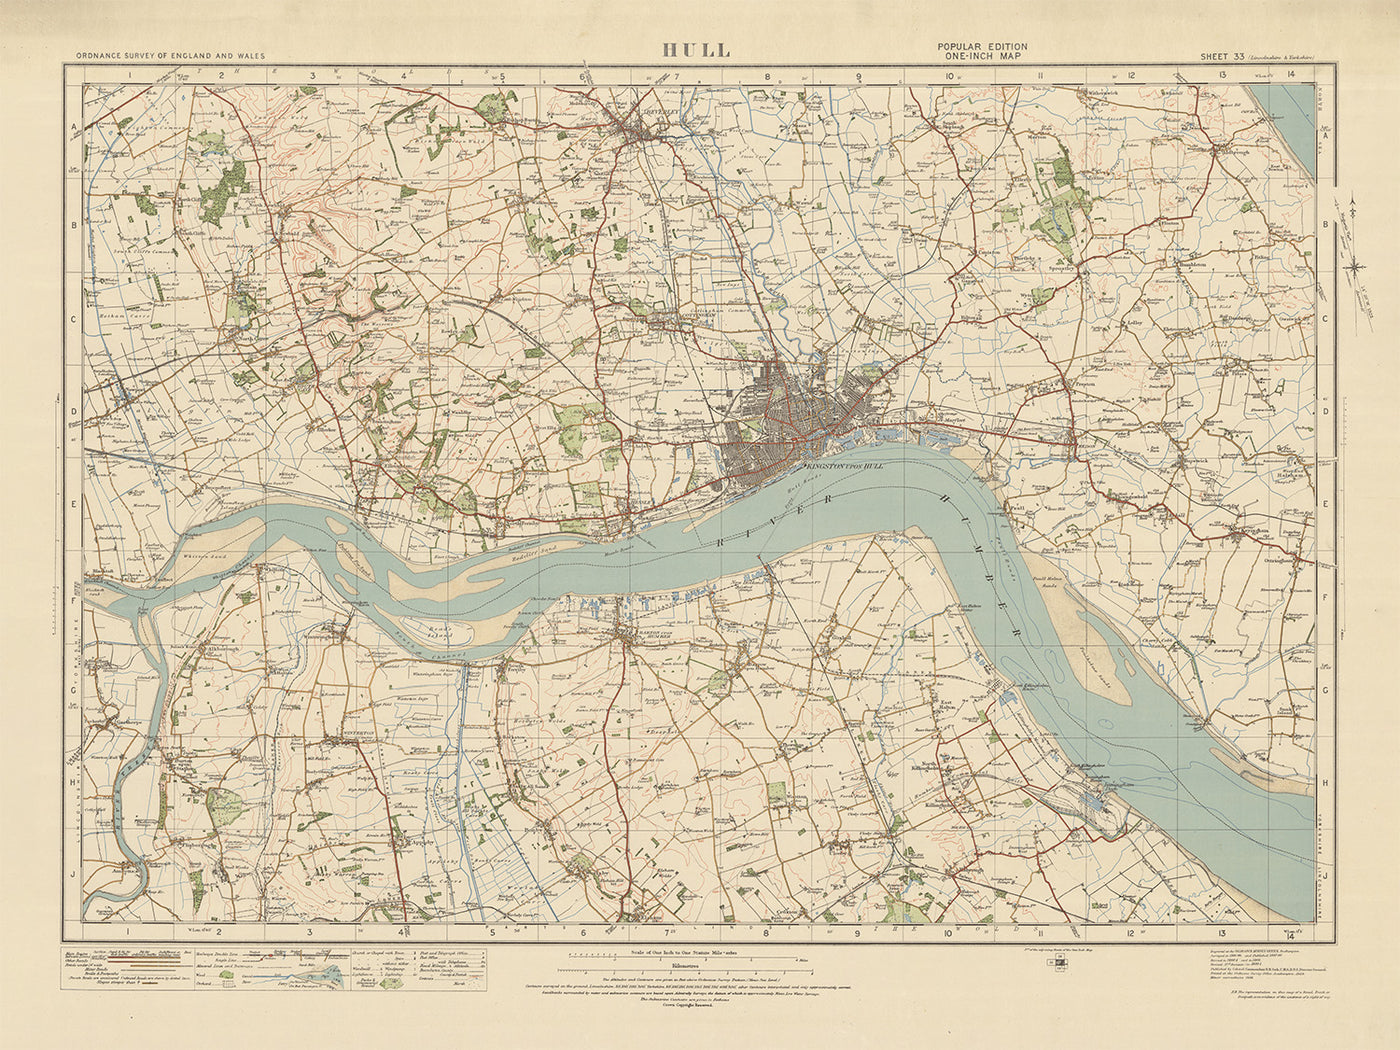 Mapa antiguo de Ordnance Survey, hoja 33 - Hull, 1925: Beverley, Barton-upon-Humber, Hessle, Winterton y río Humber